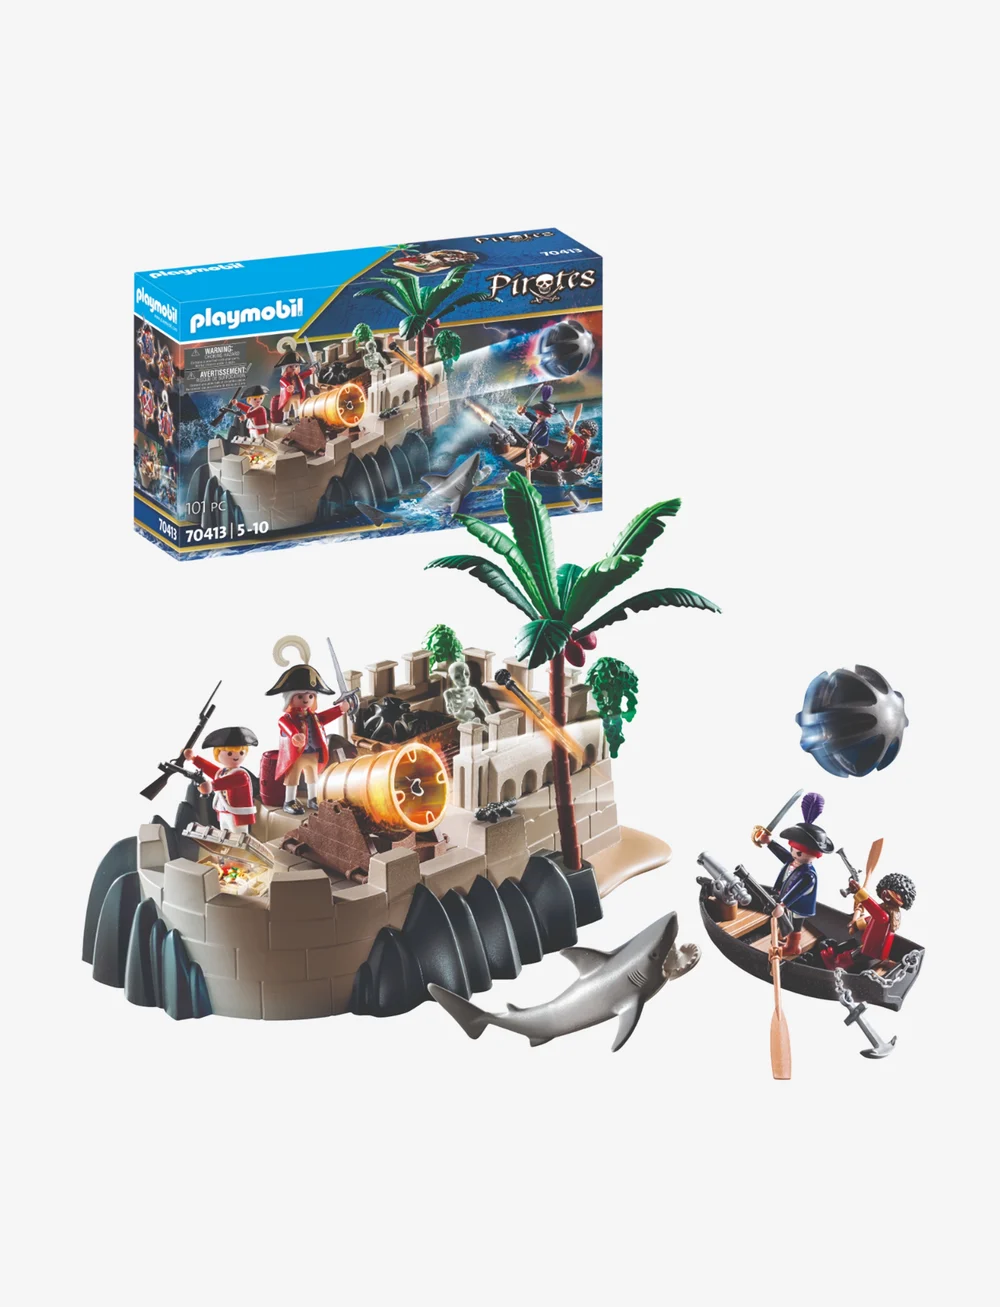 PLAYMOBIL Playmobil Pirates Redcoat Bastion - 70413 - Playmobil Pirates 